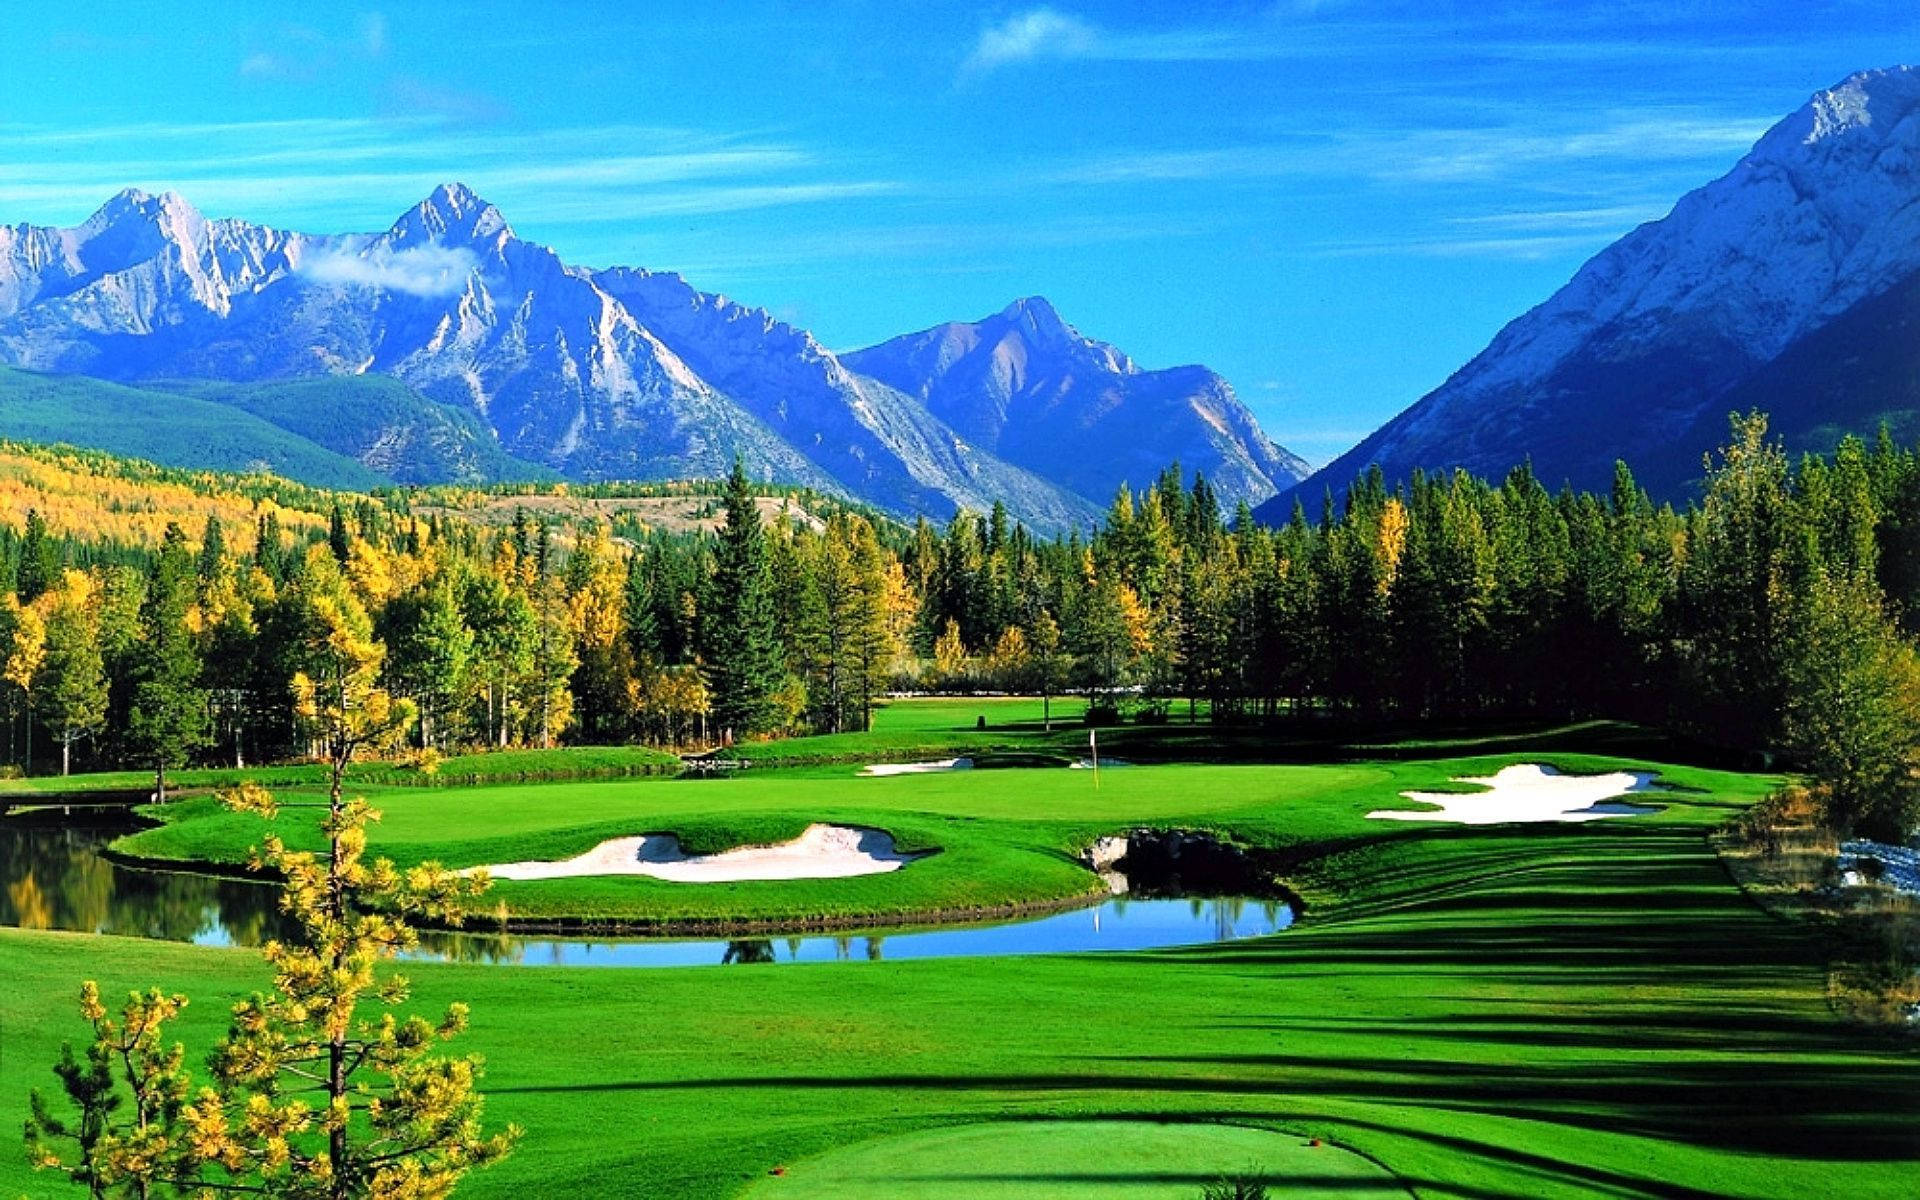 Ultra HD Golf Course Pine Trees Wallpaper